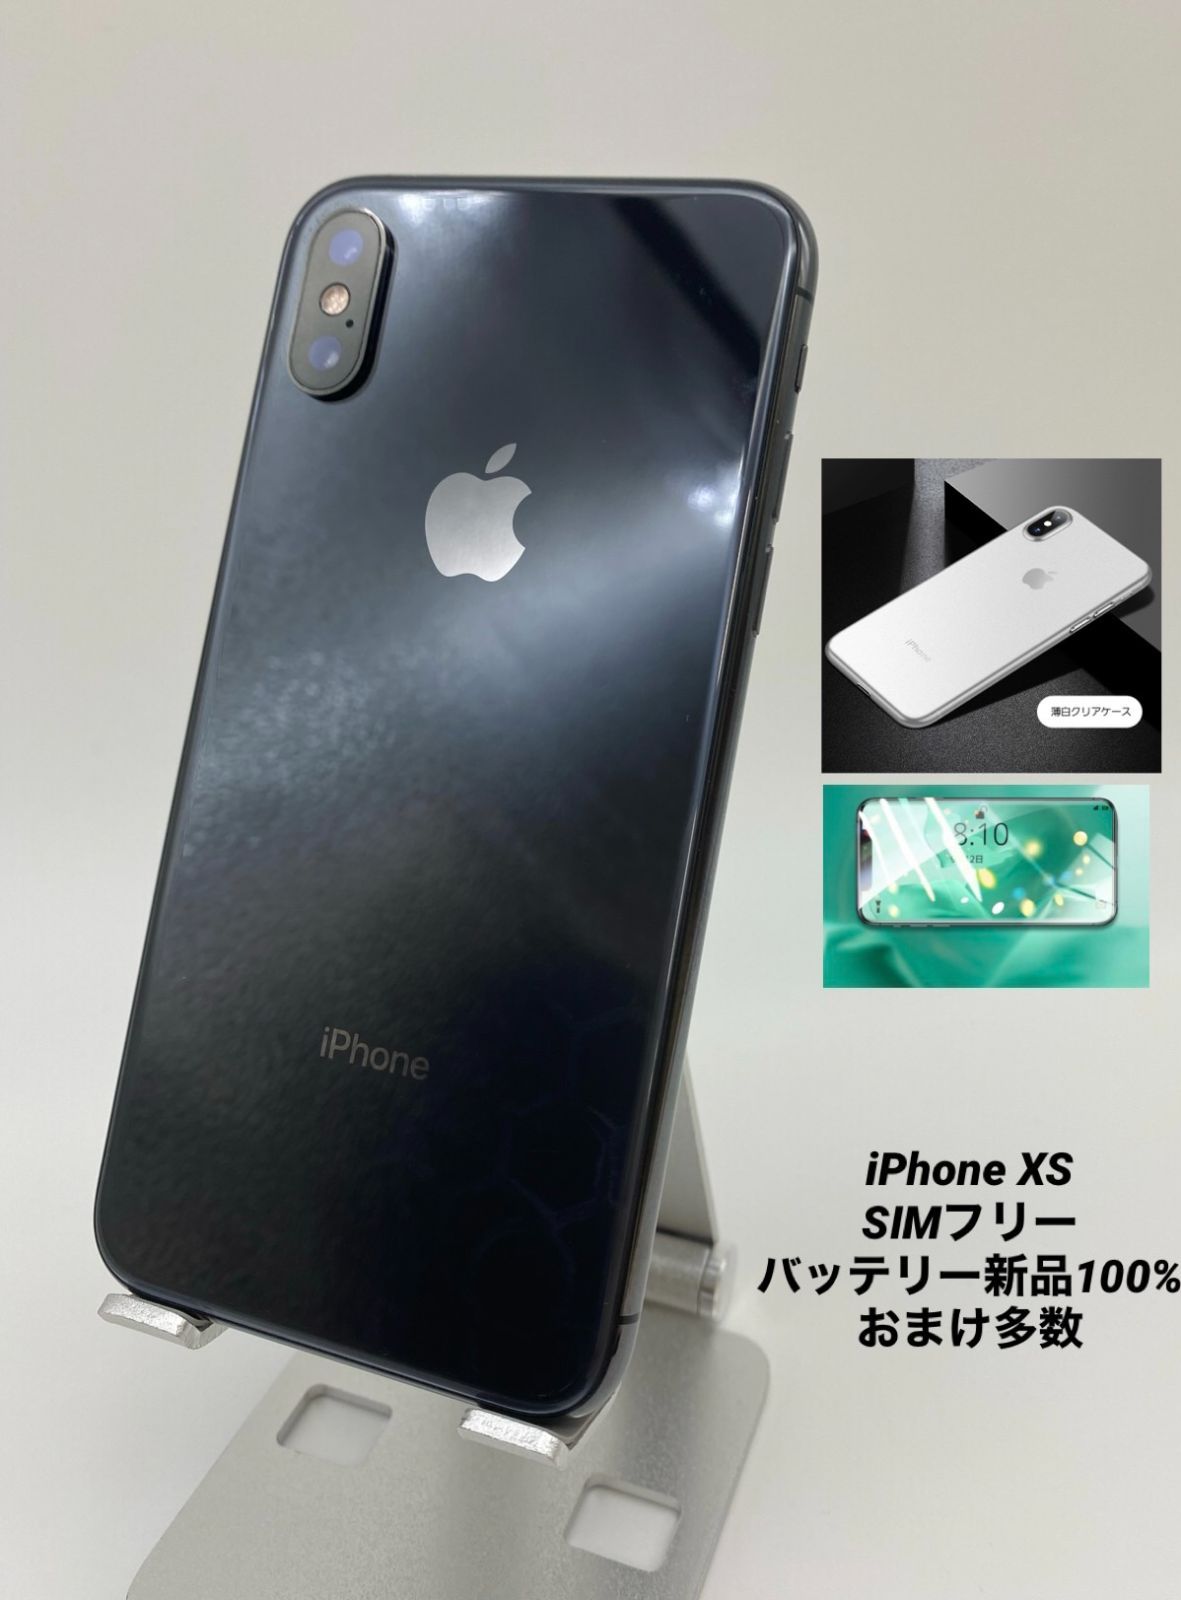 iPhoneXS Space Gray 256G SIMフリー (台湾版) - スマートフォン/携帯電話